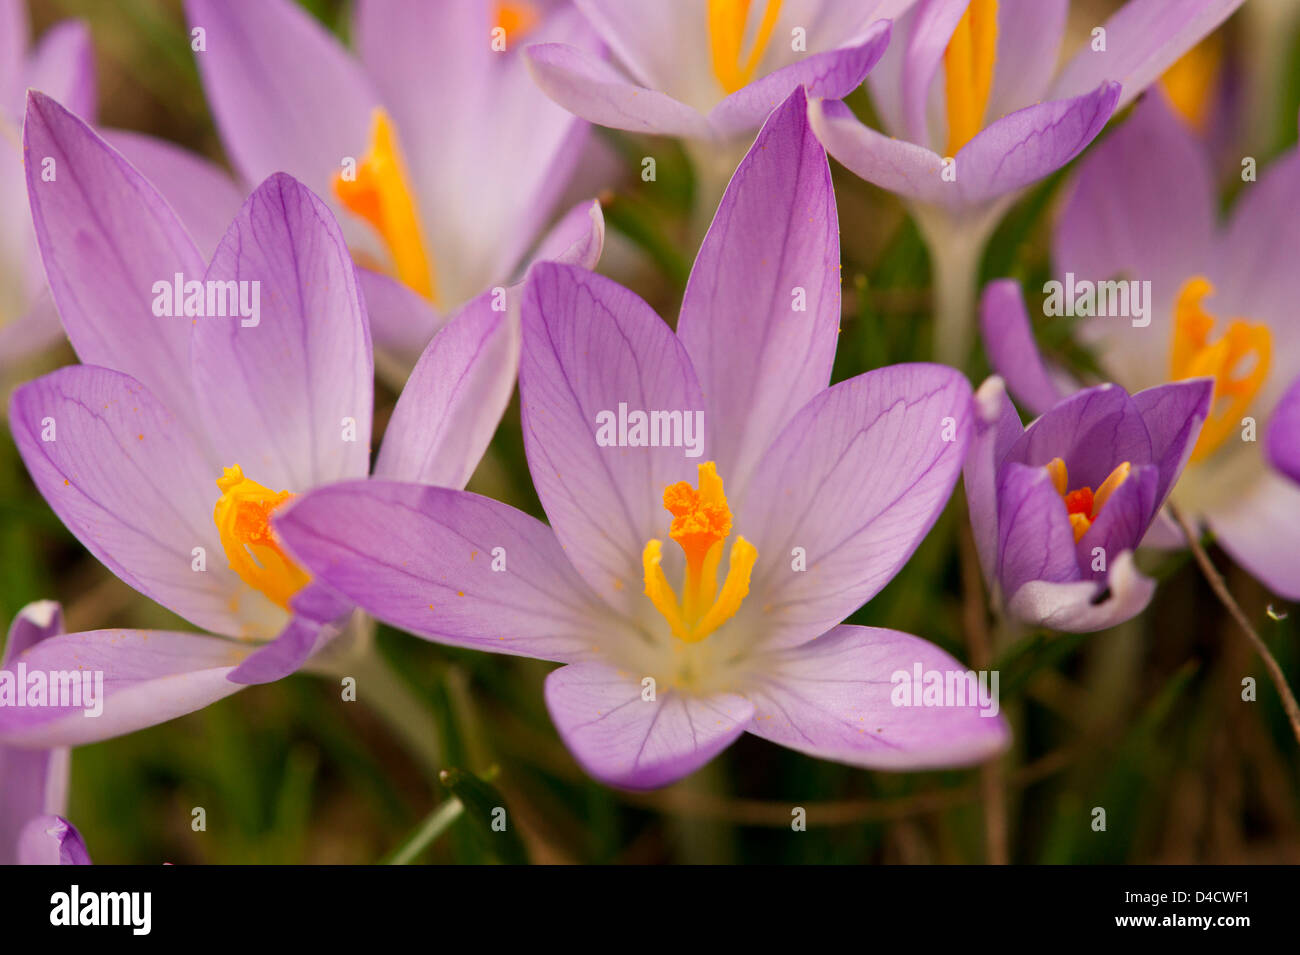 Soft purple crocus flowers with deep yellow hearts Stock Photo